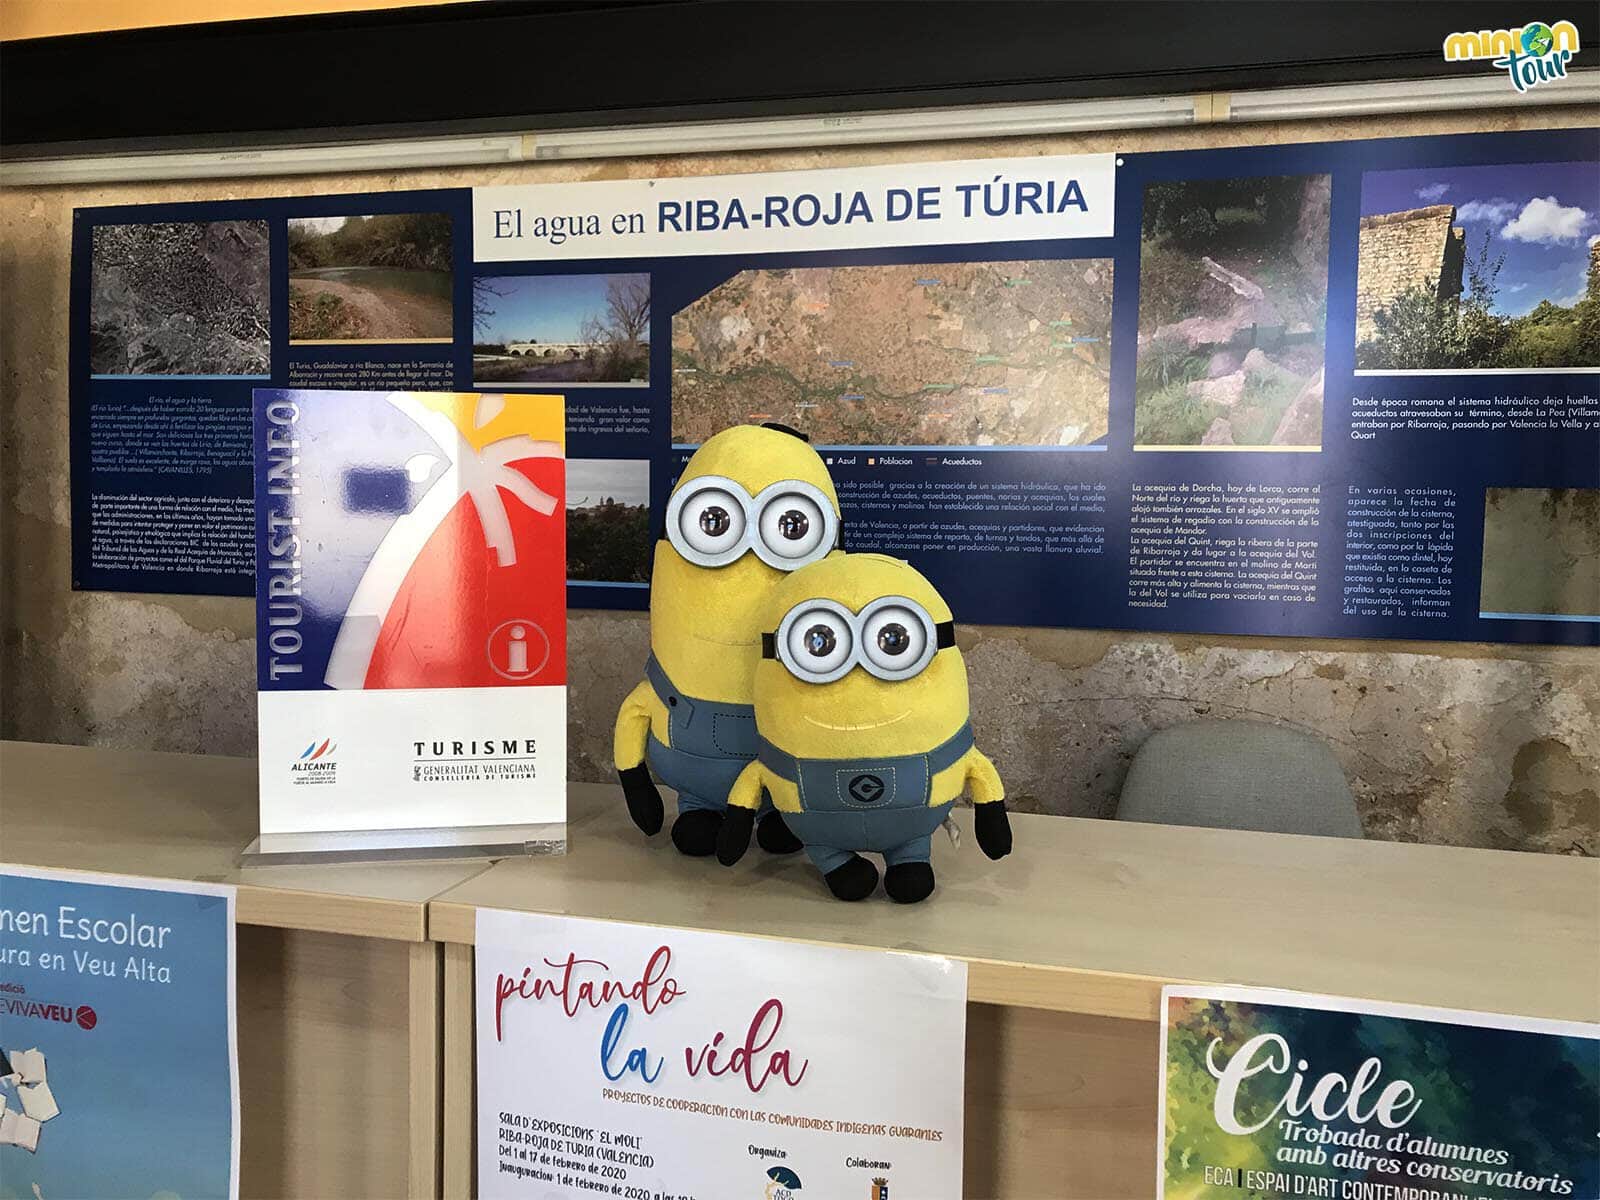 Estamos en la Oficina de Turismo de Riba-roja de Túria